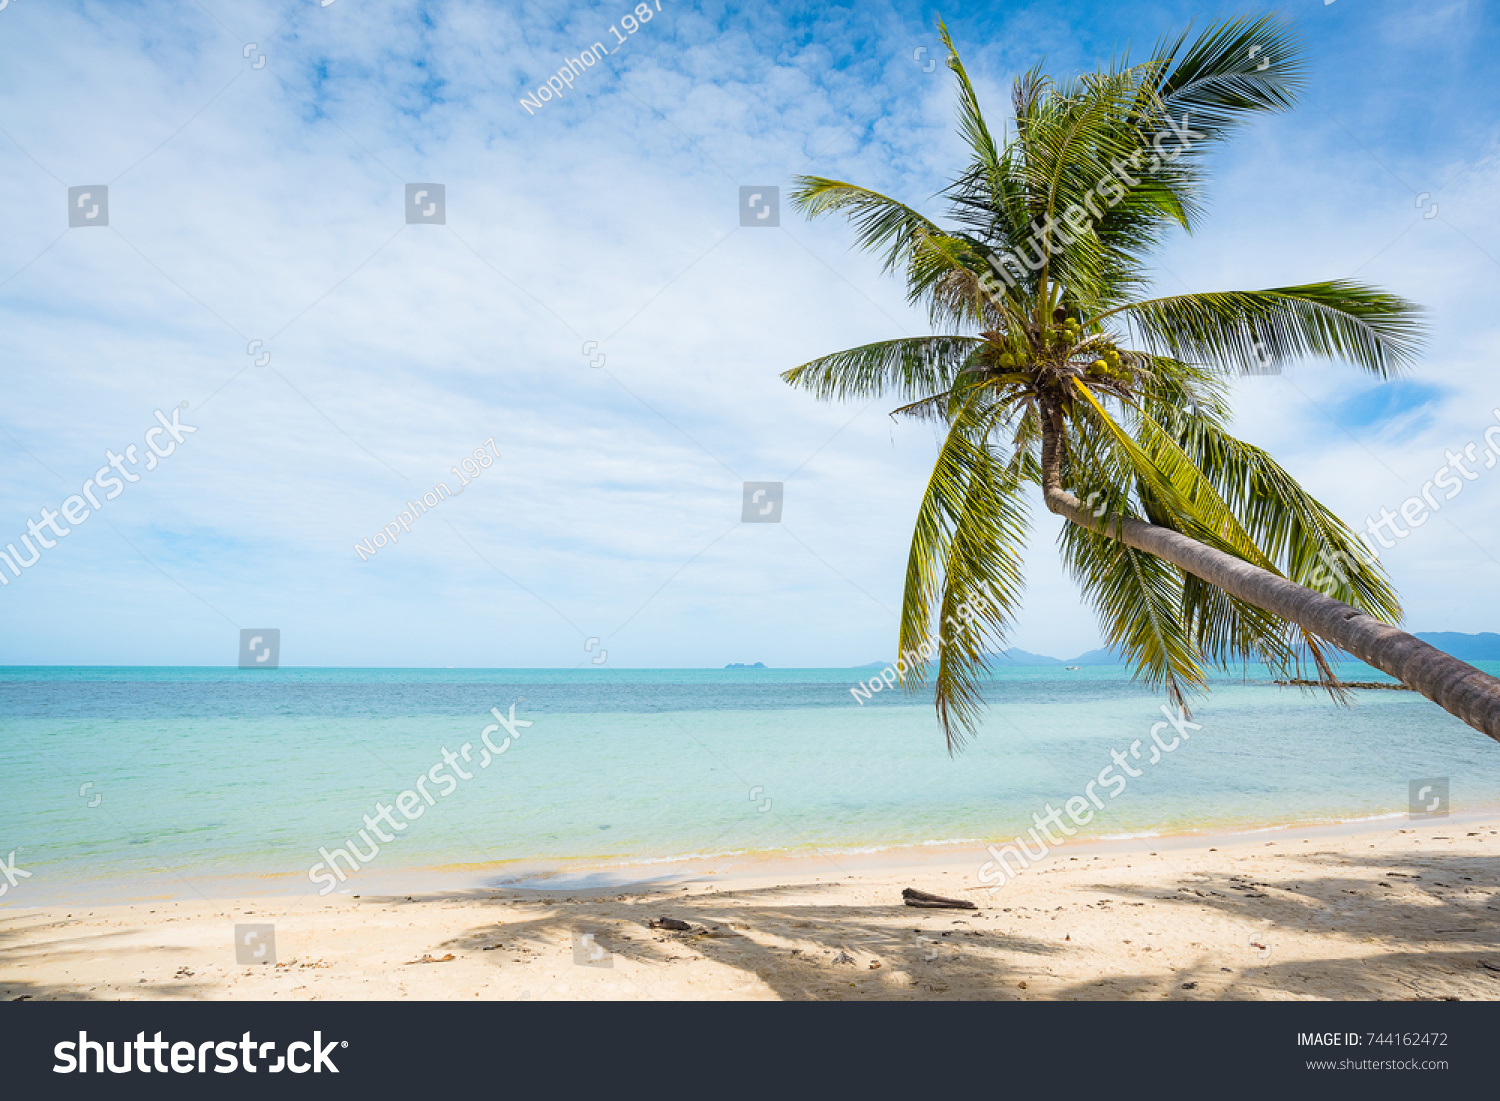 Coconut trees stretch into the sea #744162472